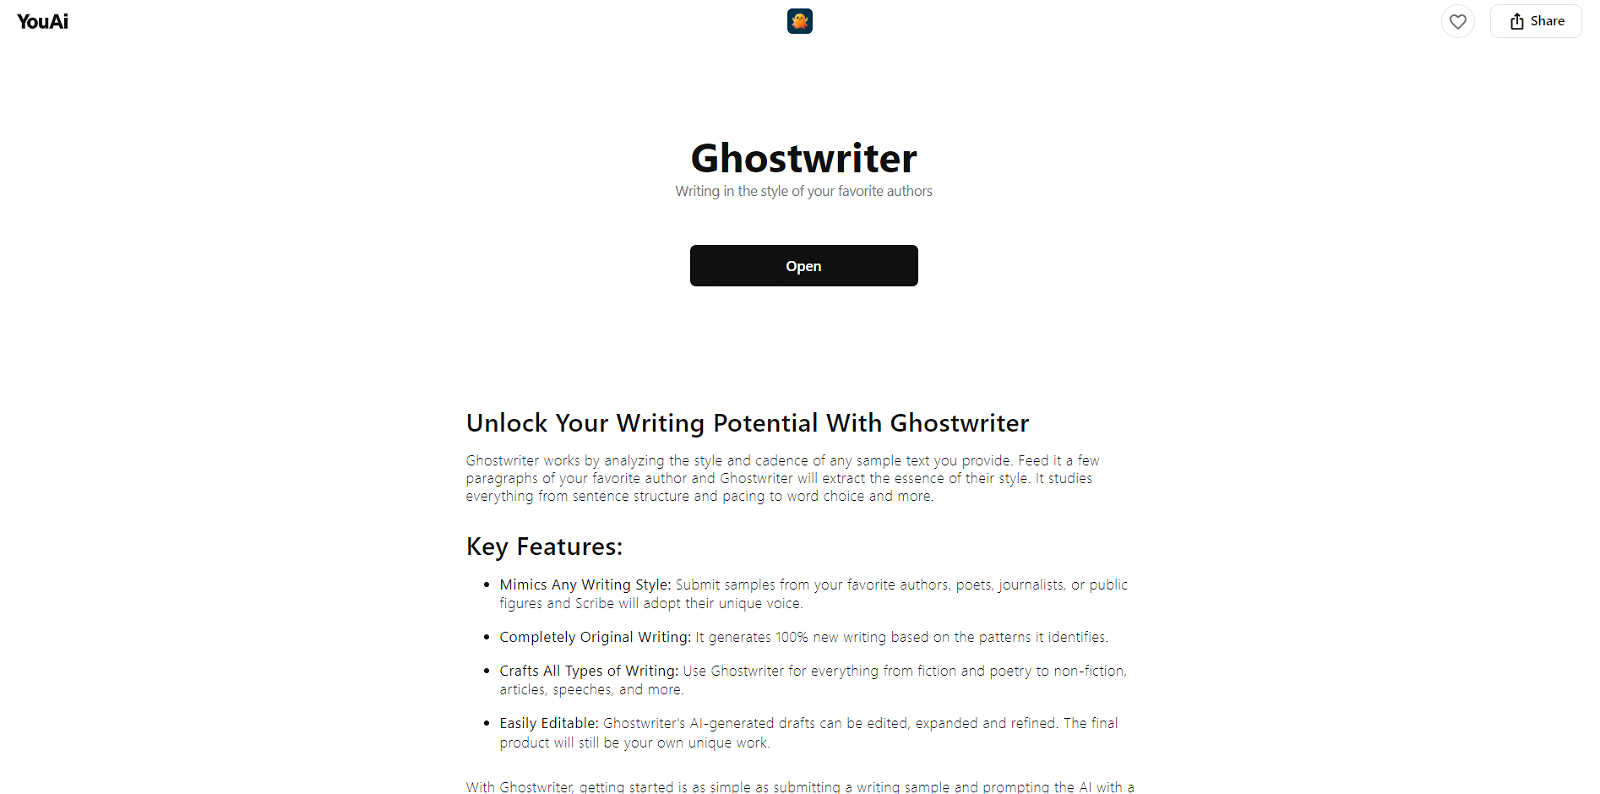 Ghostwriter by YouAI